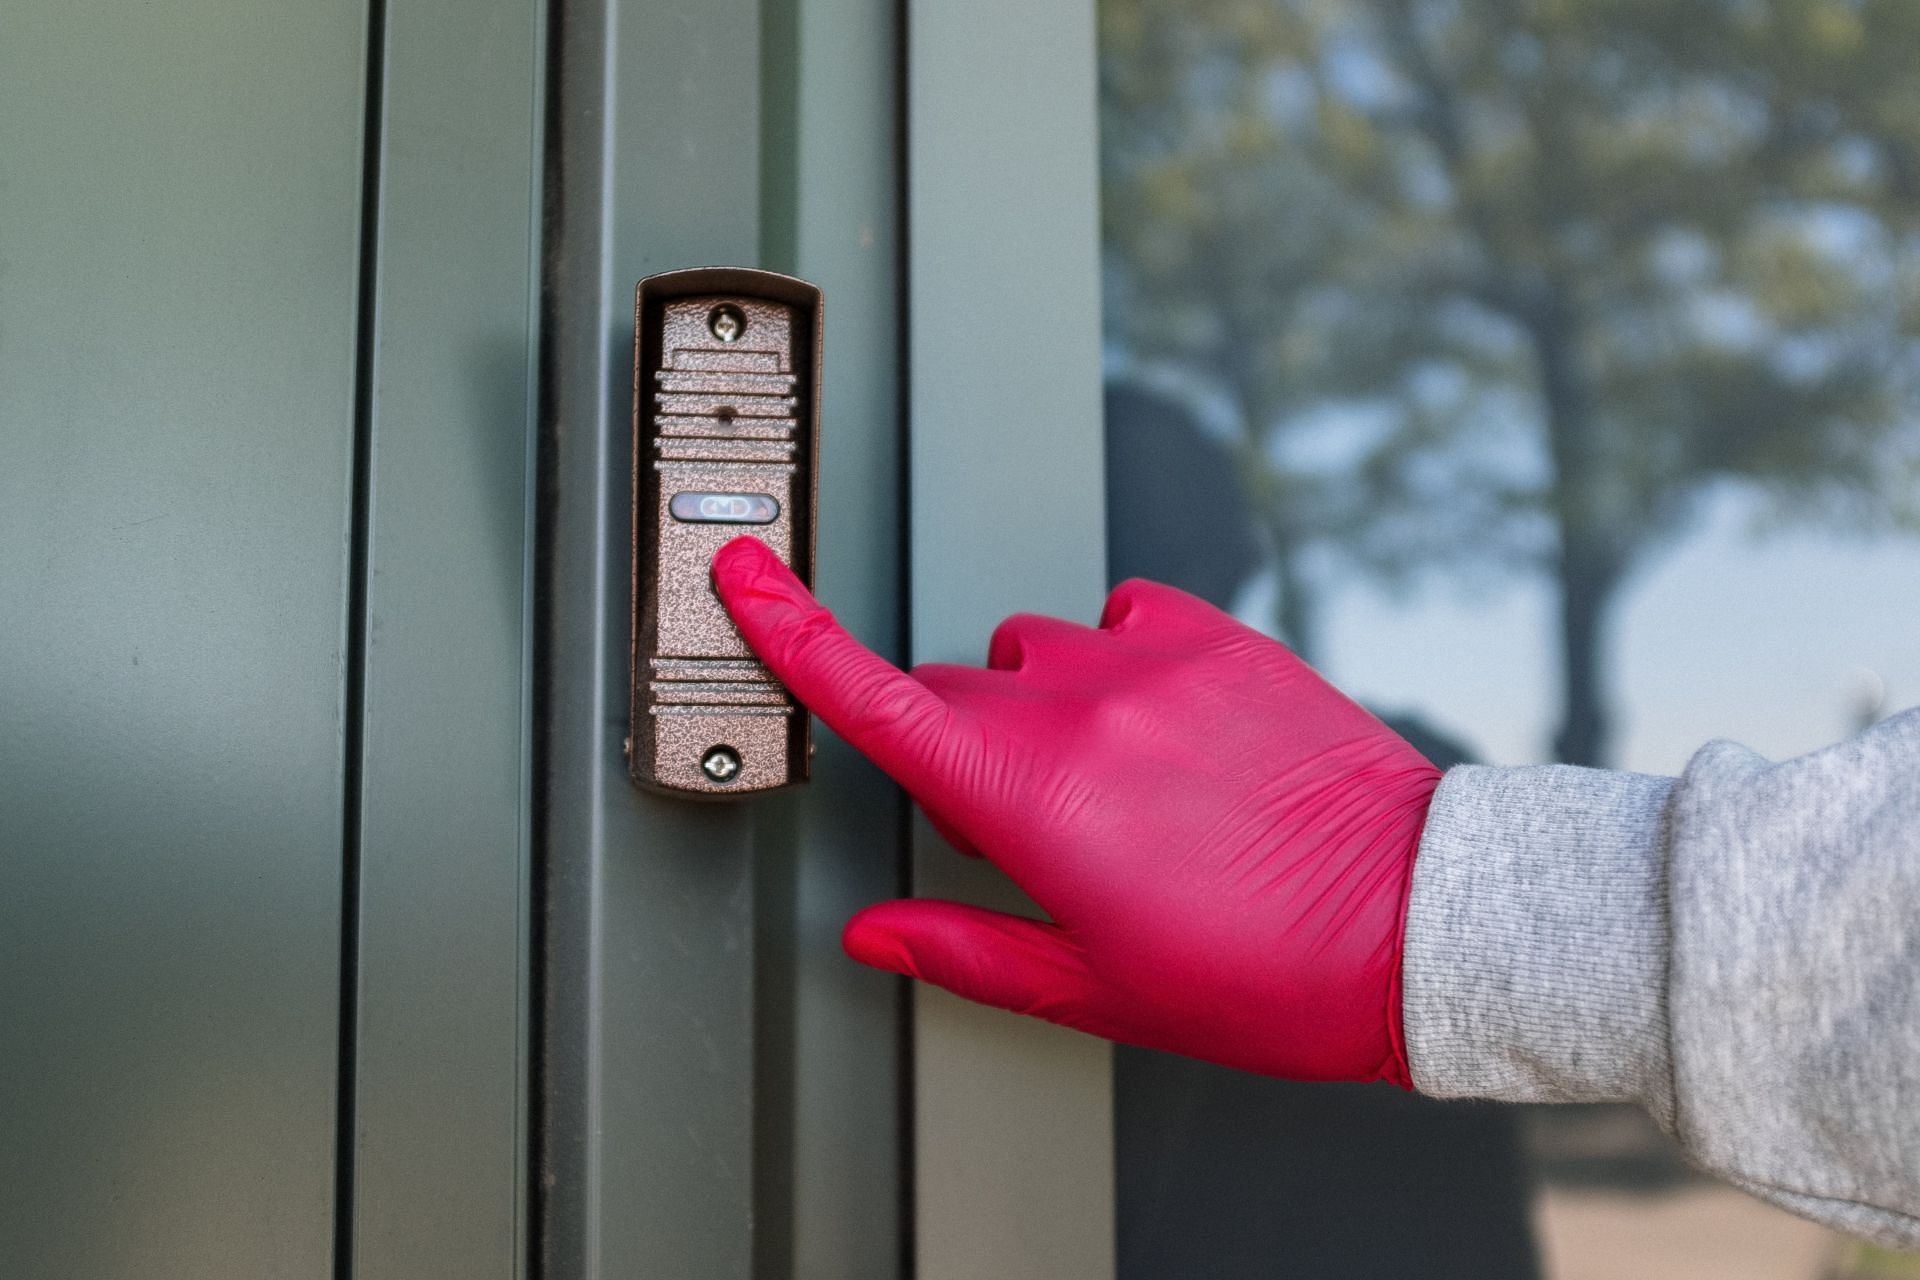 Smart doorbells are one of the must-own tech gadgets (Image via Pexels)